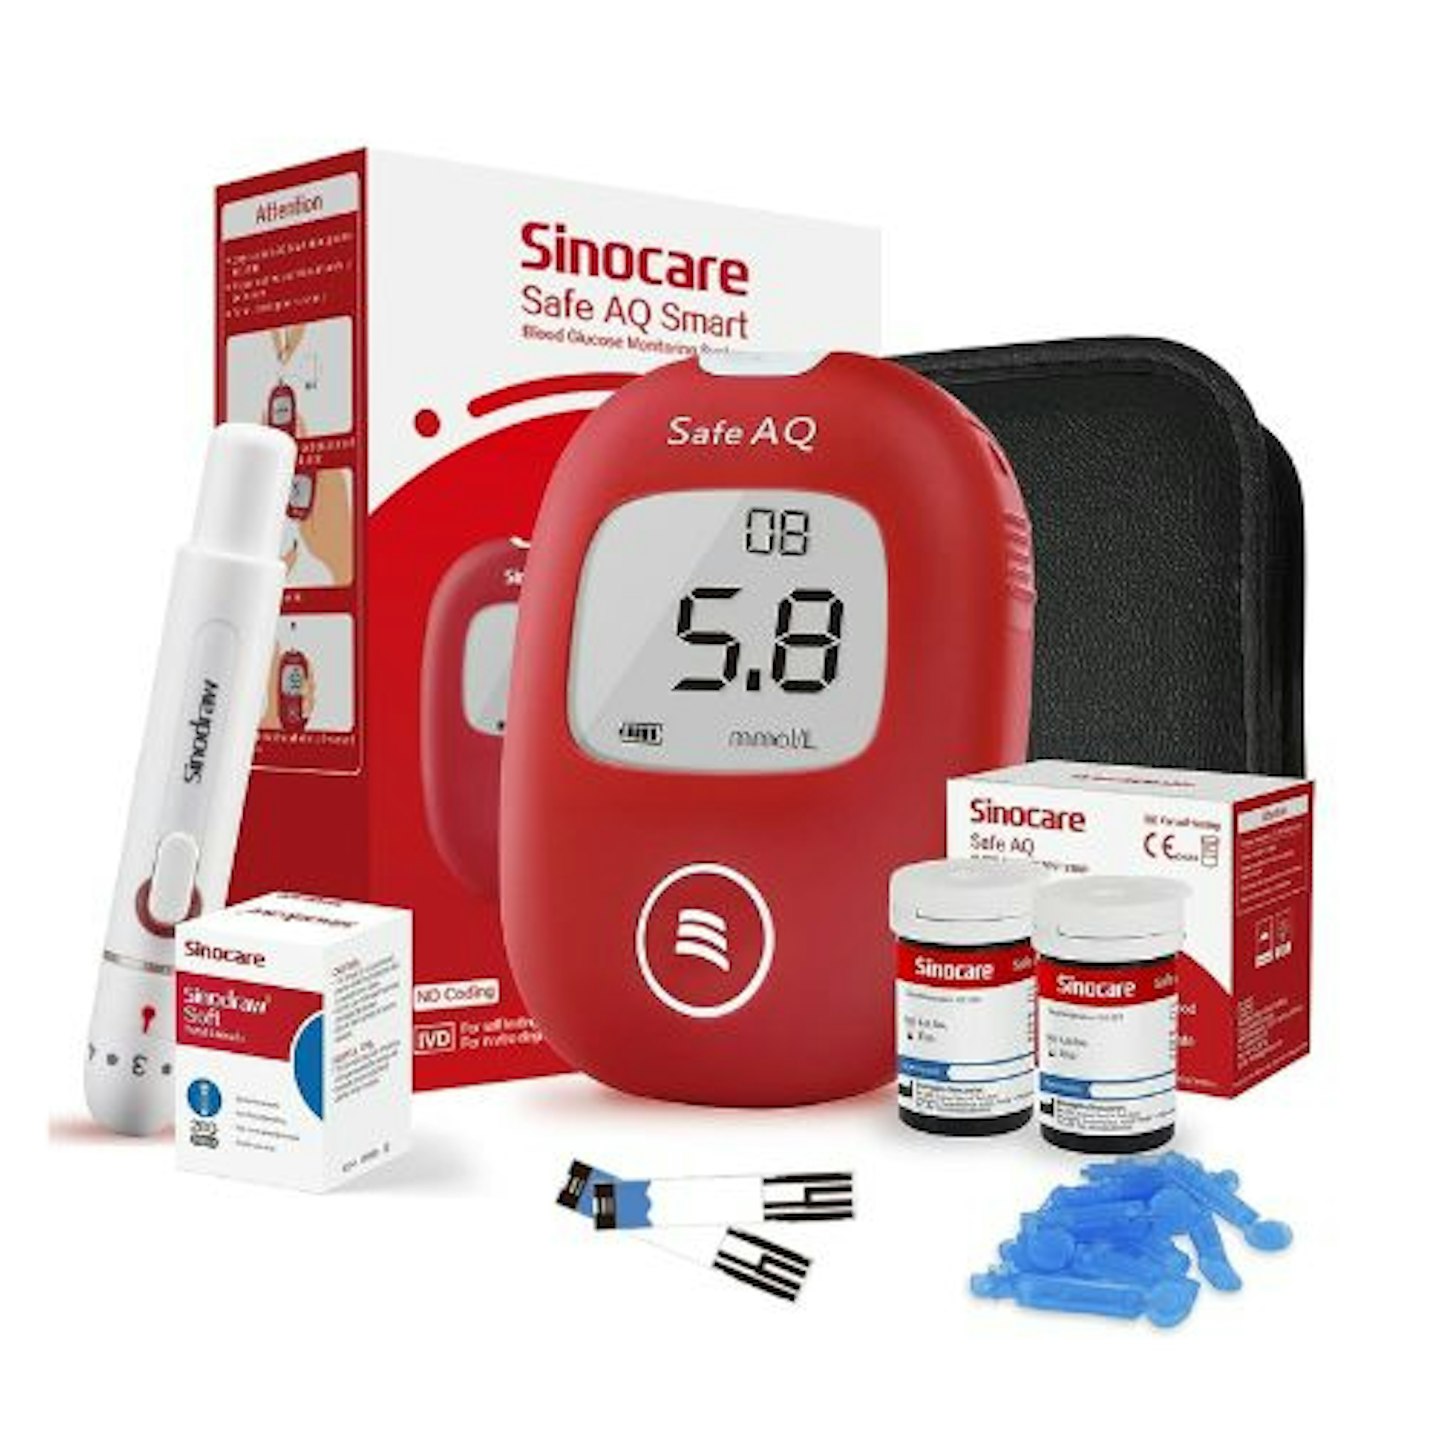 Sinocare Diabetes Testing Kit with Monitor